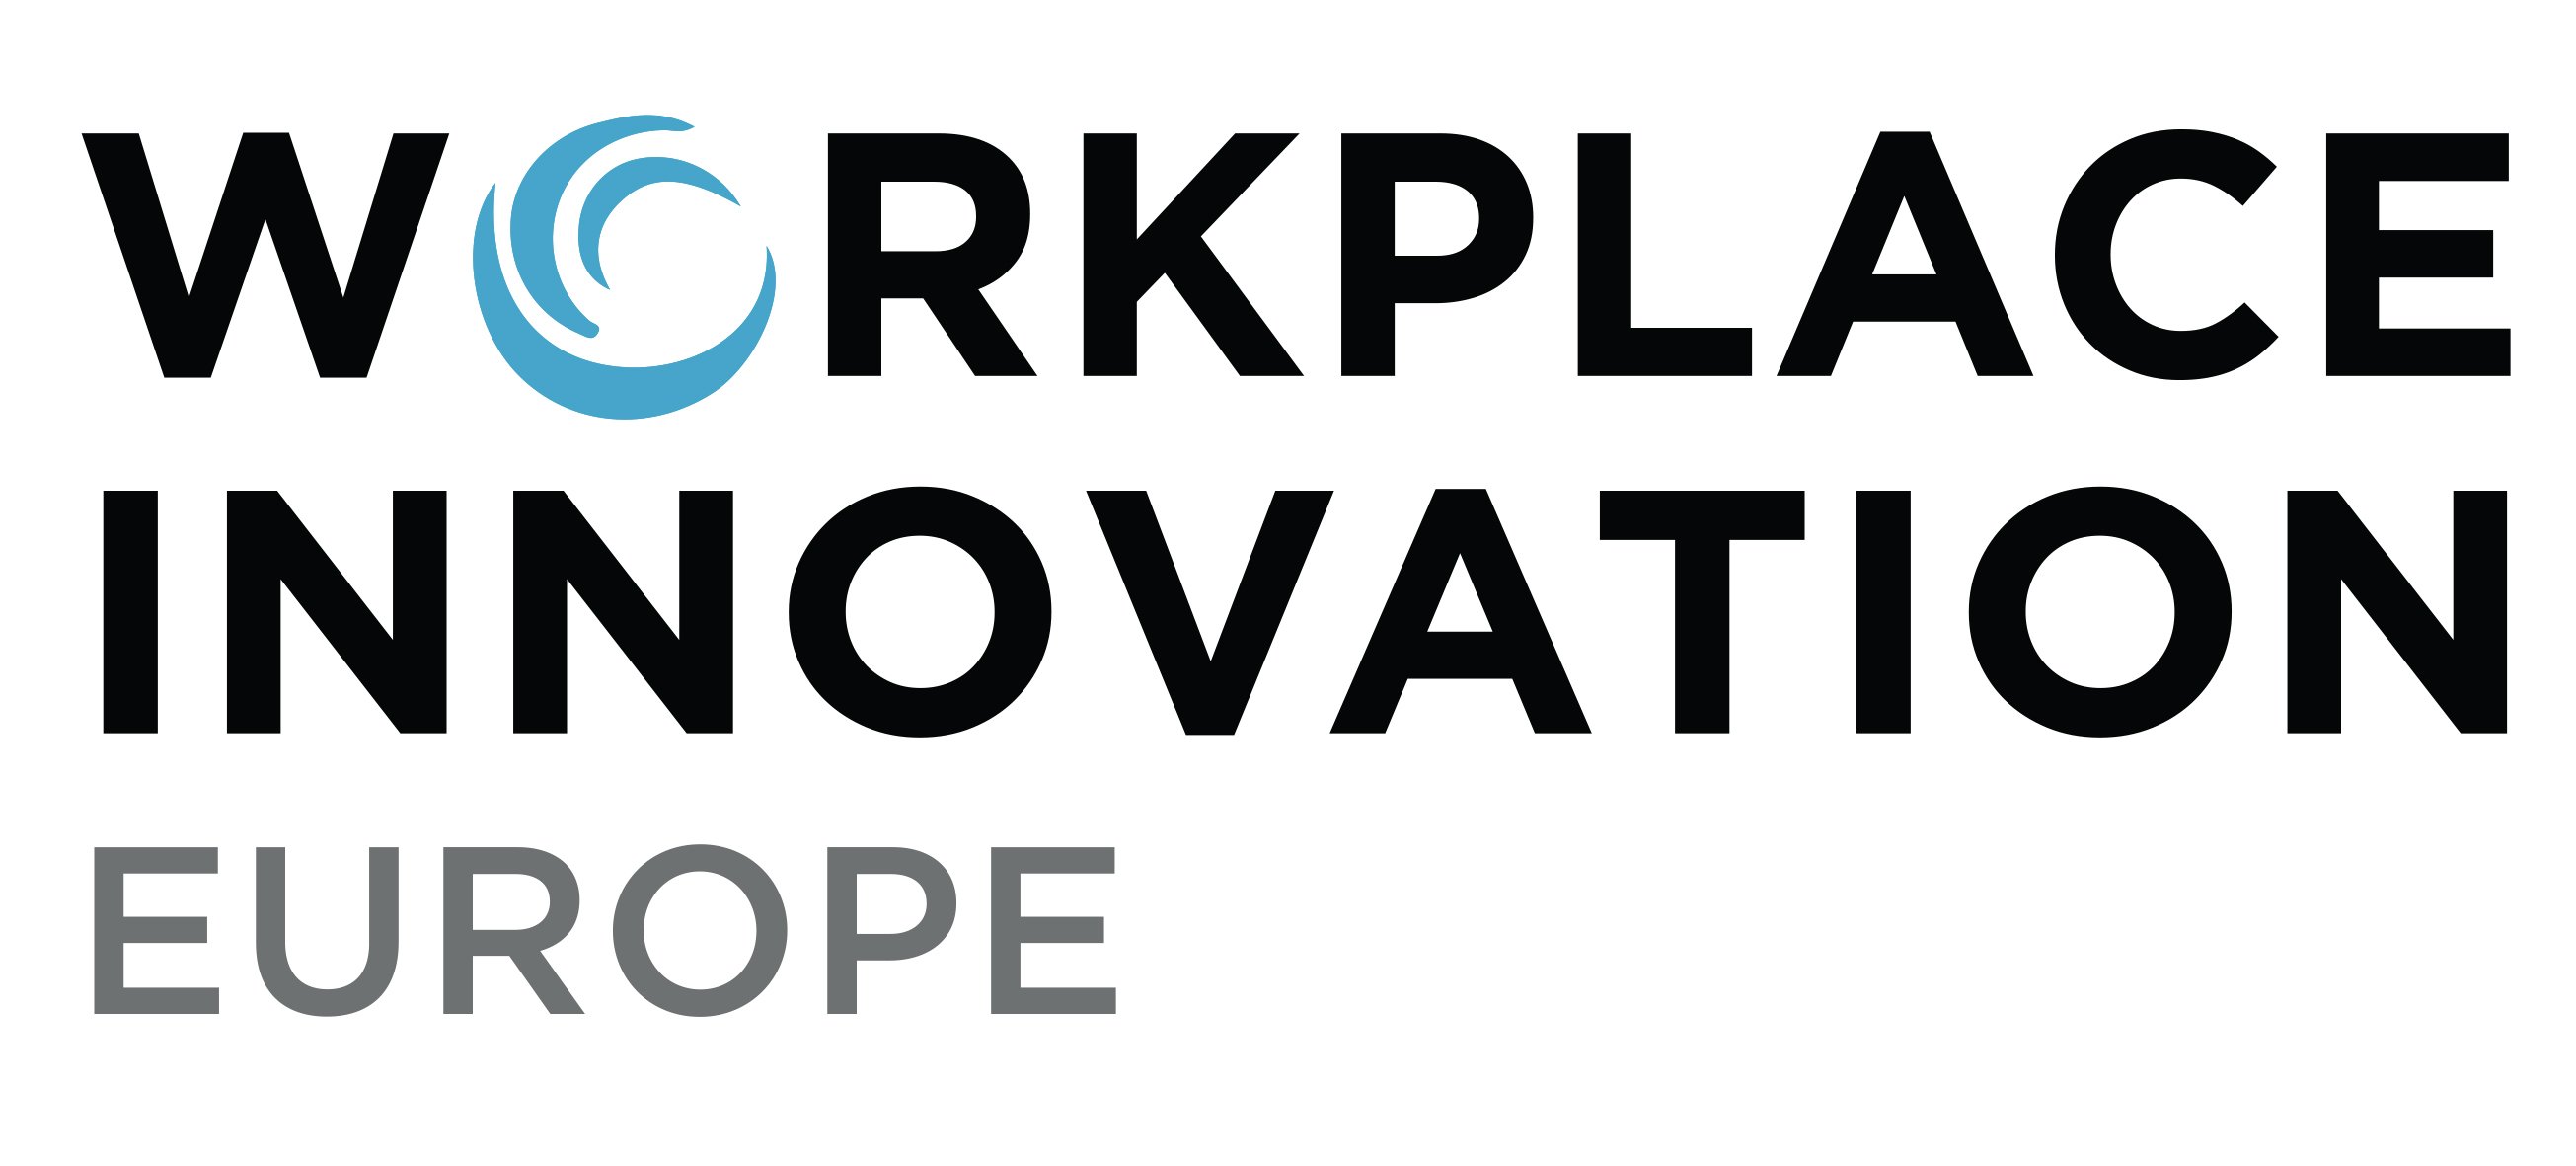 Workplace Innovation Europe logo